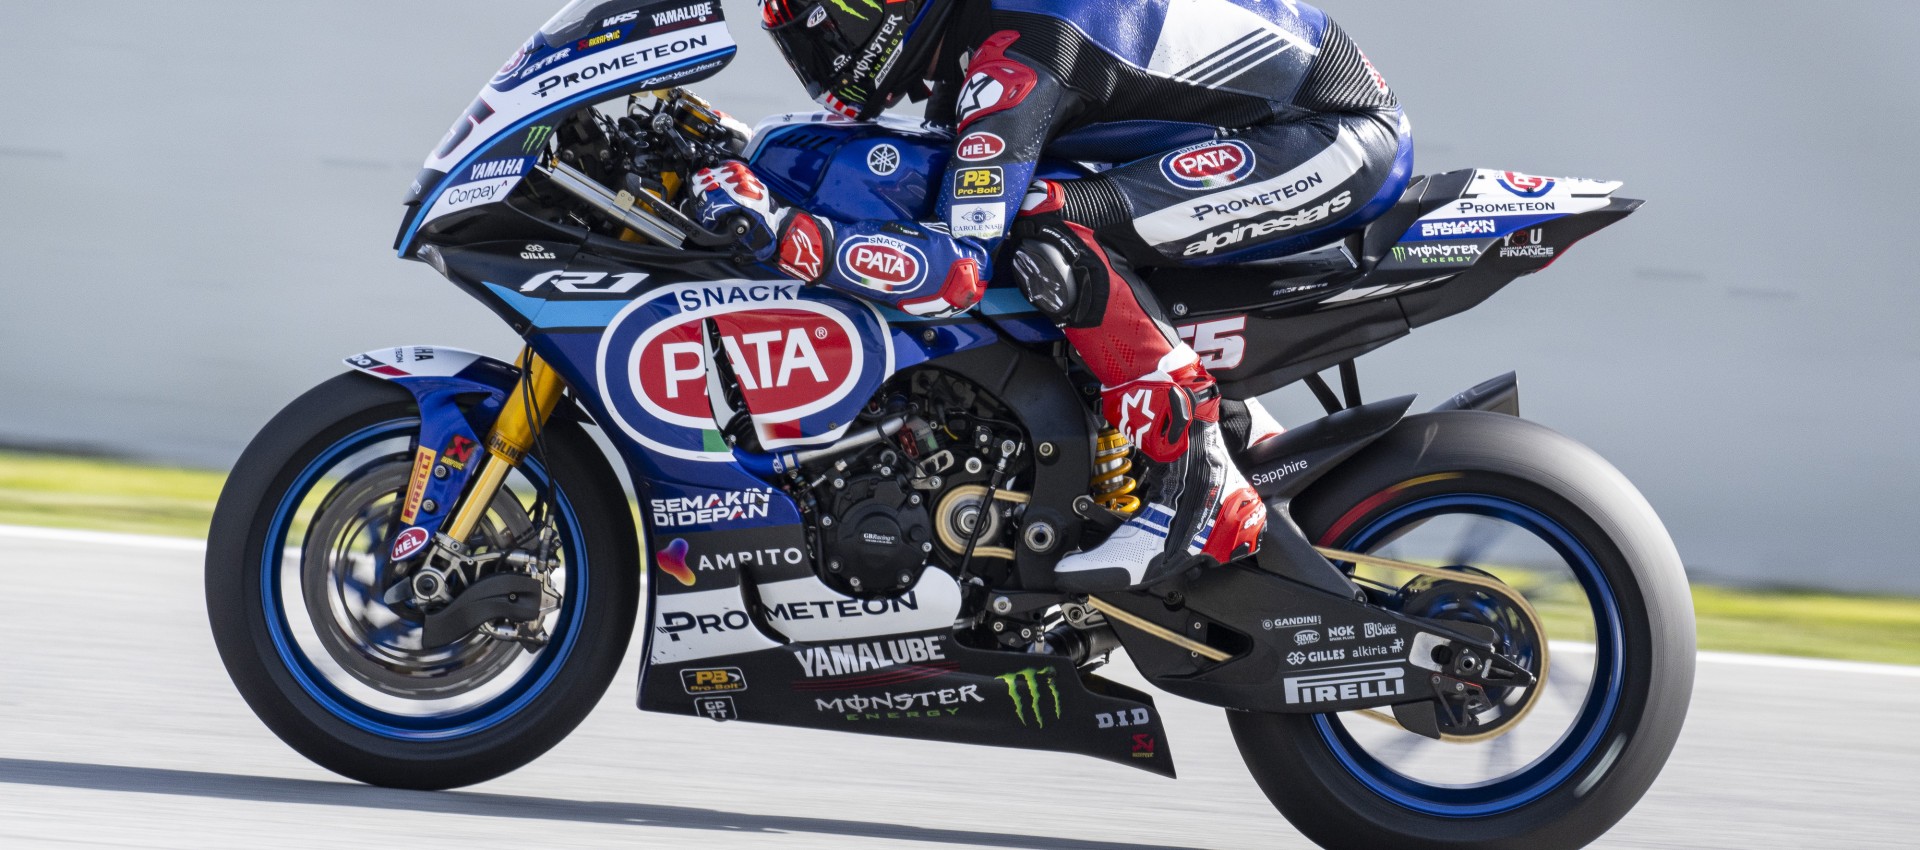 BMC Air Filter è sponsor e fornitore ufficiale del team Yamaha WorldSBK Superbike.